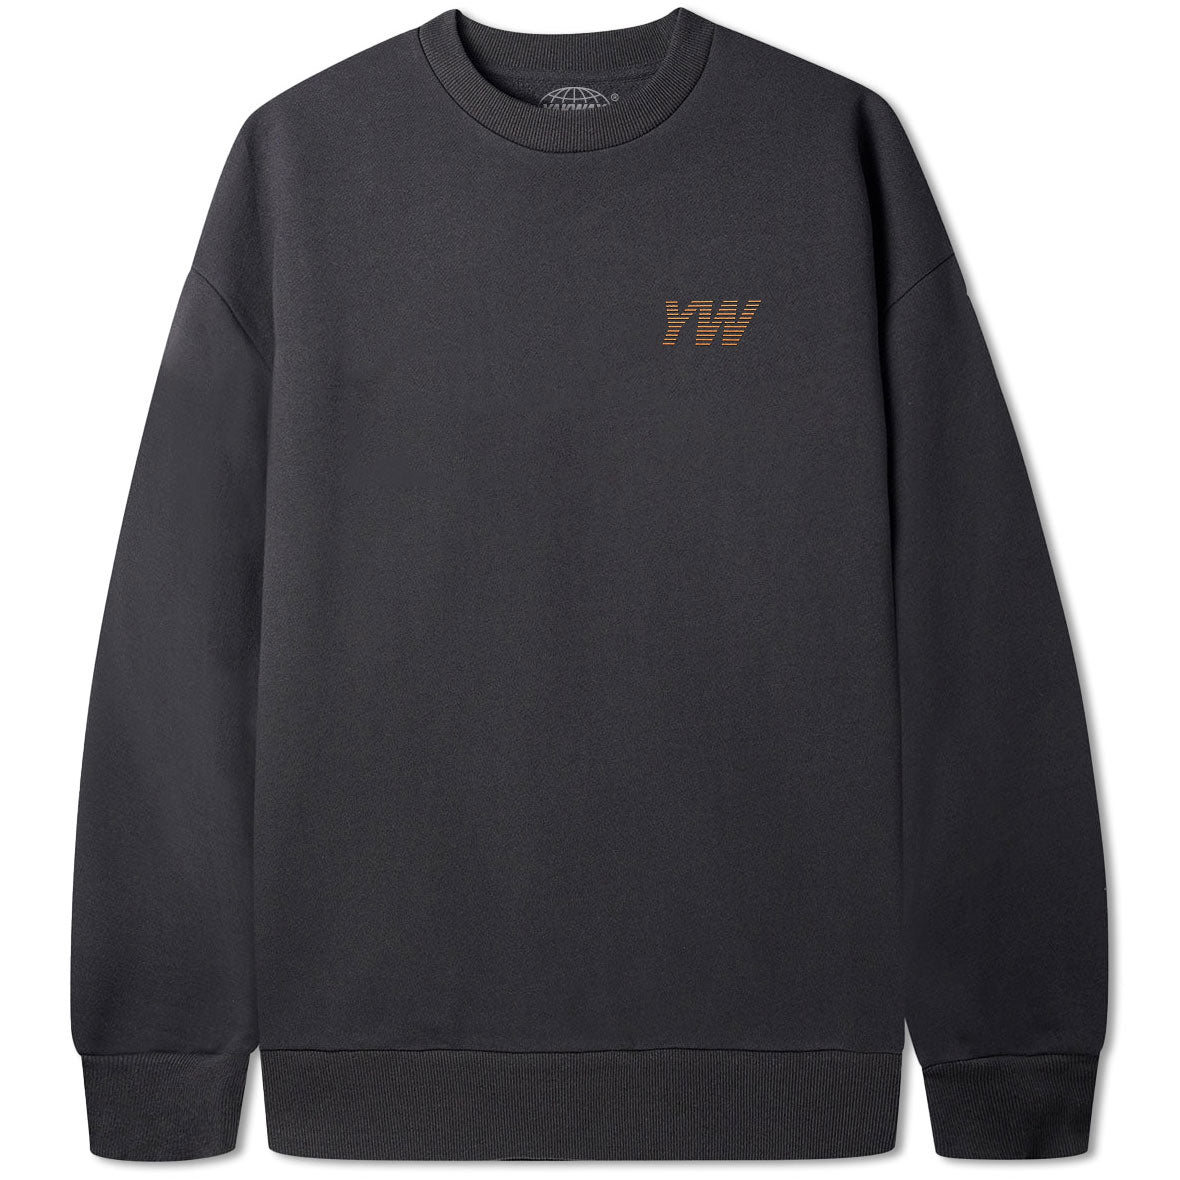 Yakwax Fundamentals Crewneck Sweater - Black/Bronze - Mens Crew Neck Sweatshirt by Yakwax